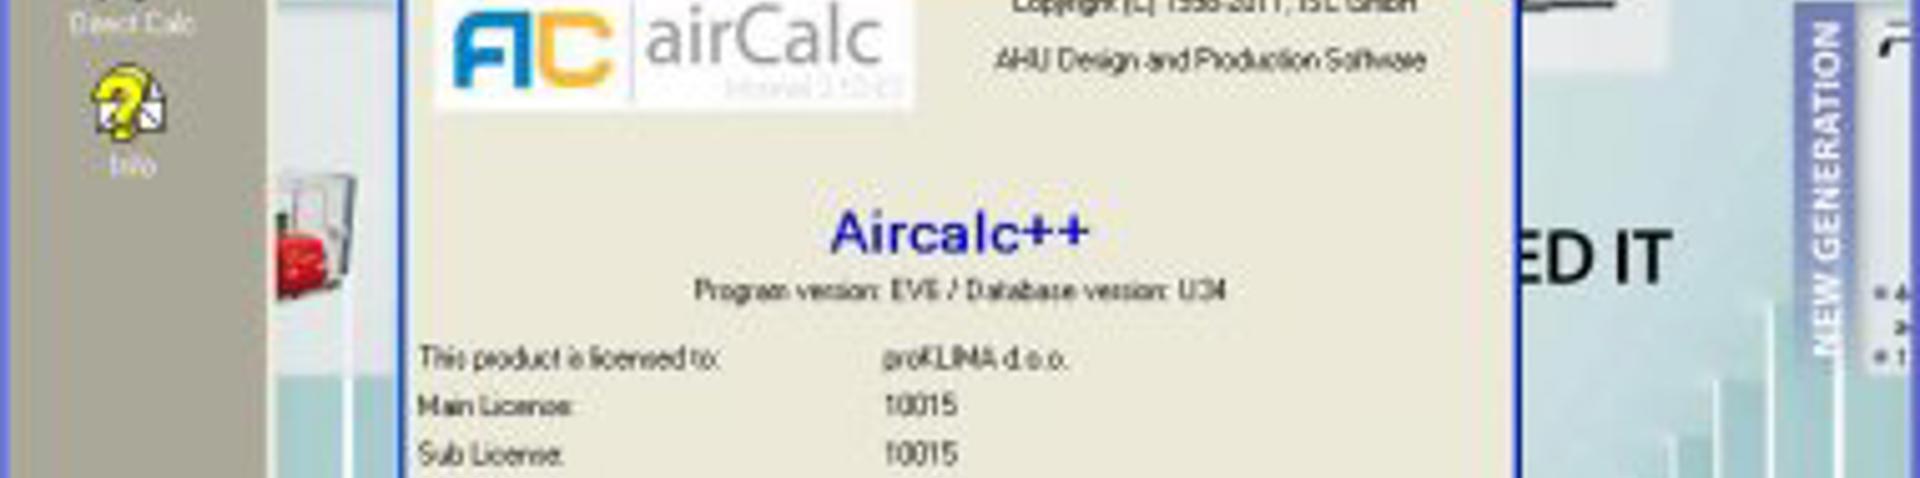 airCalc++